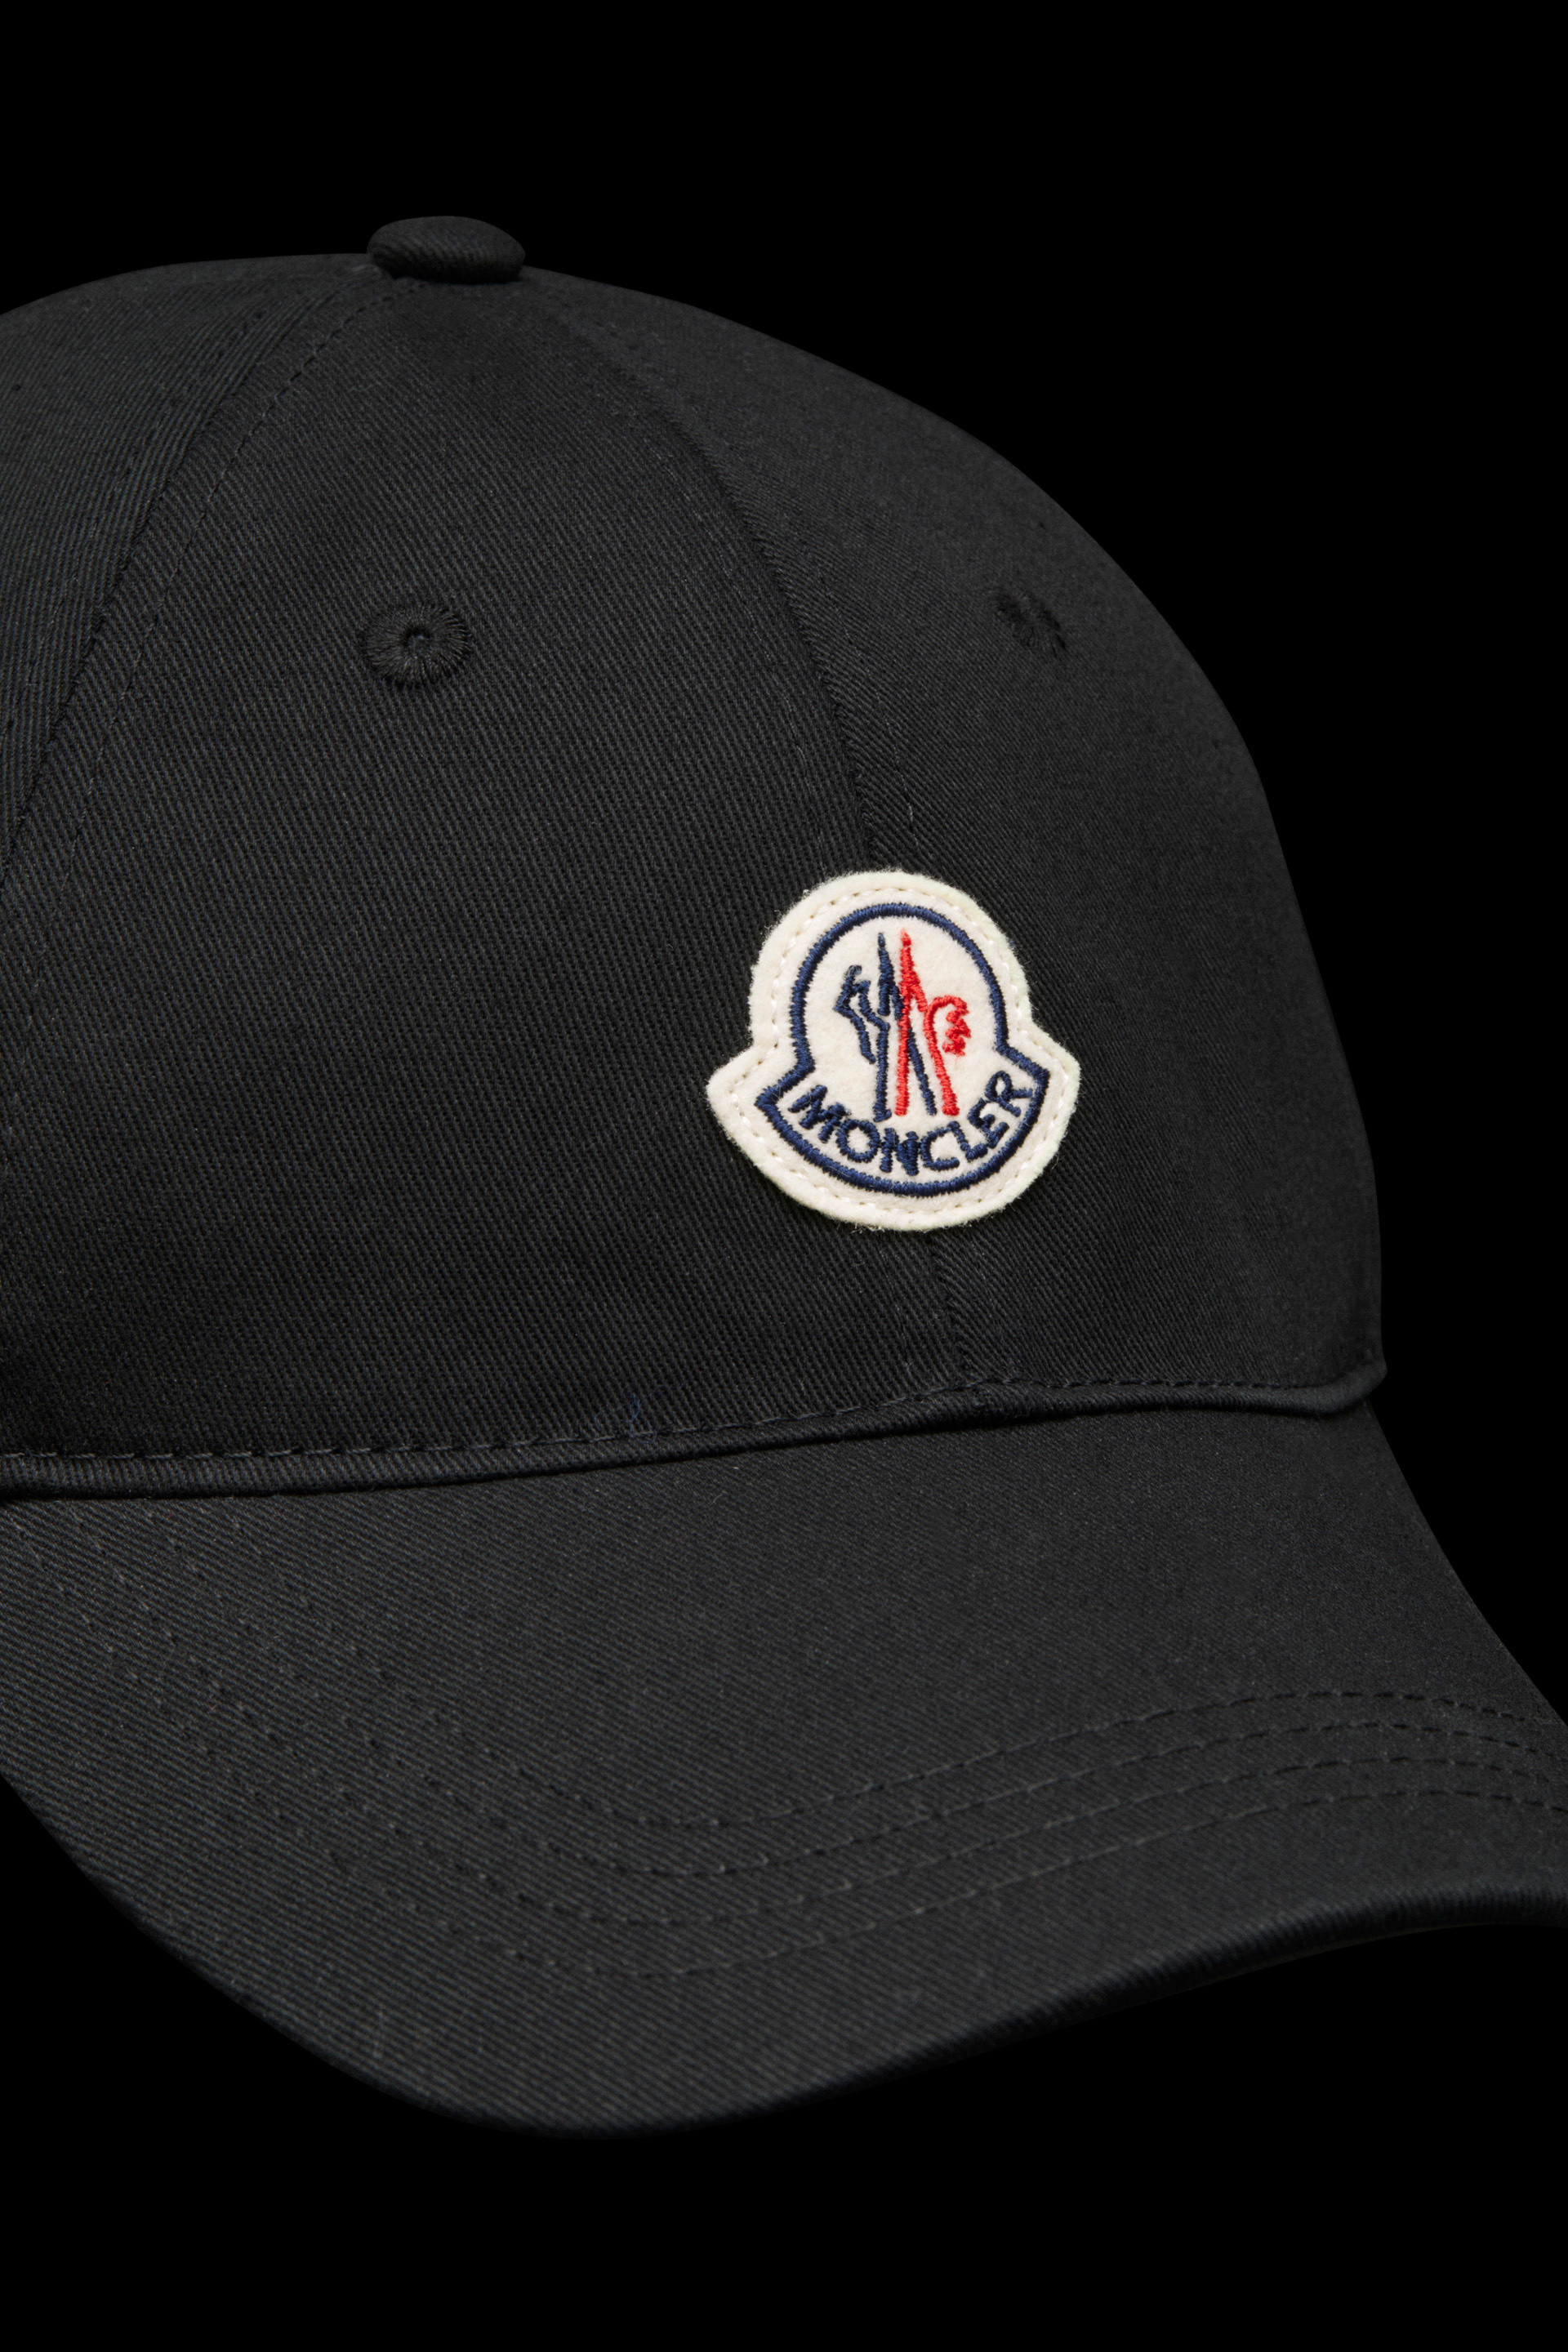 MONCLER モンクレール ブラックキャップ帽子 3B00040 V0006 999 イタリア正規品 新品